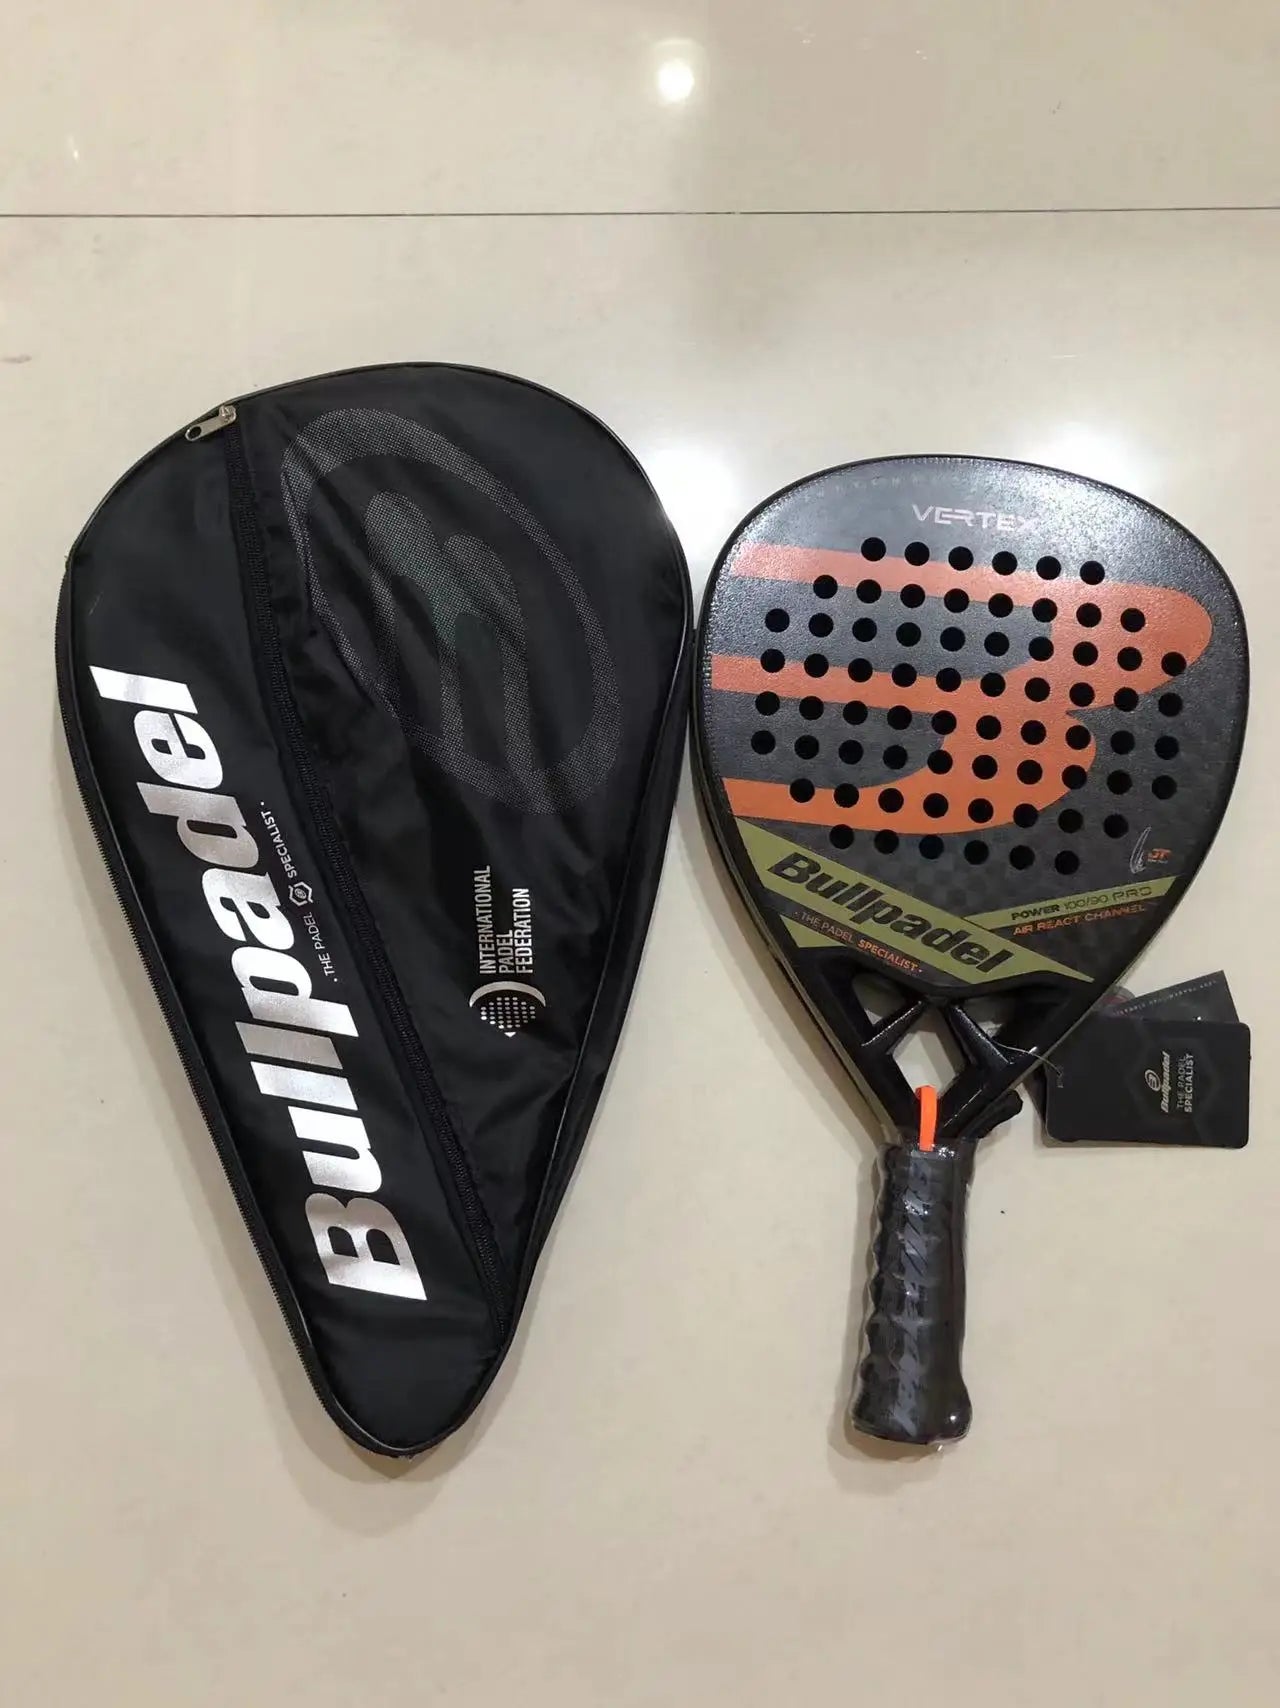 18K 12K Padel Tennis Racket Professional Soft Face Carbon Fiber Soft EVA Face Paddle Tennis Sports Racquet Equipment With Cover